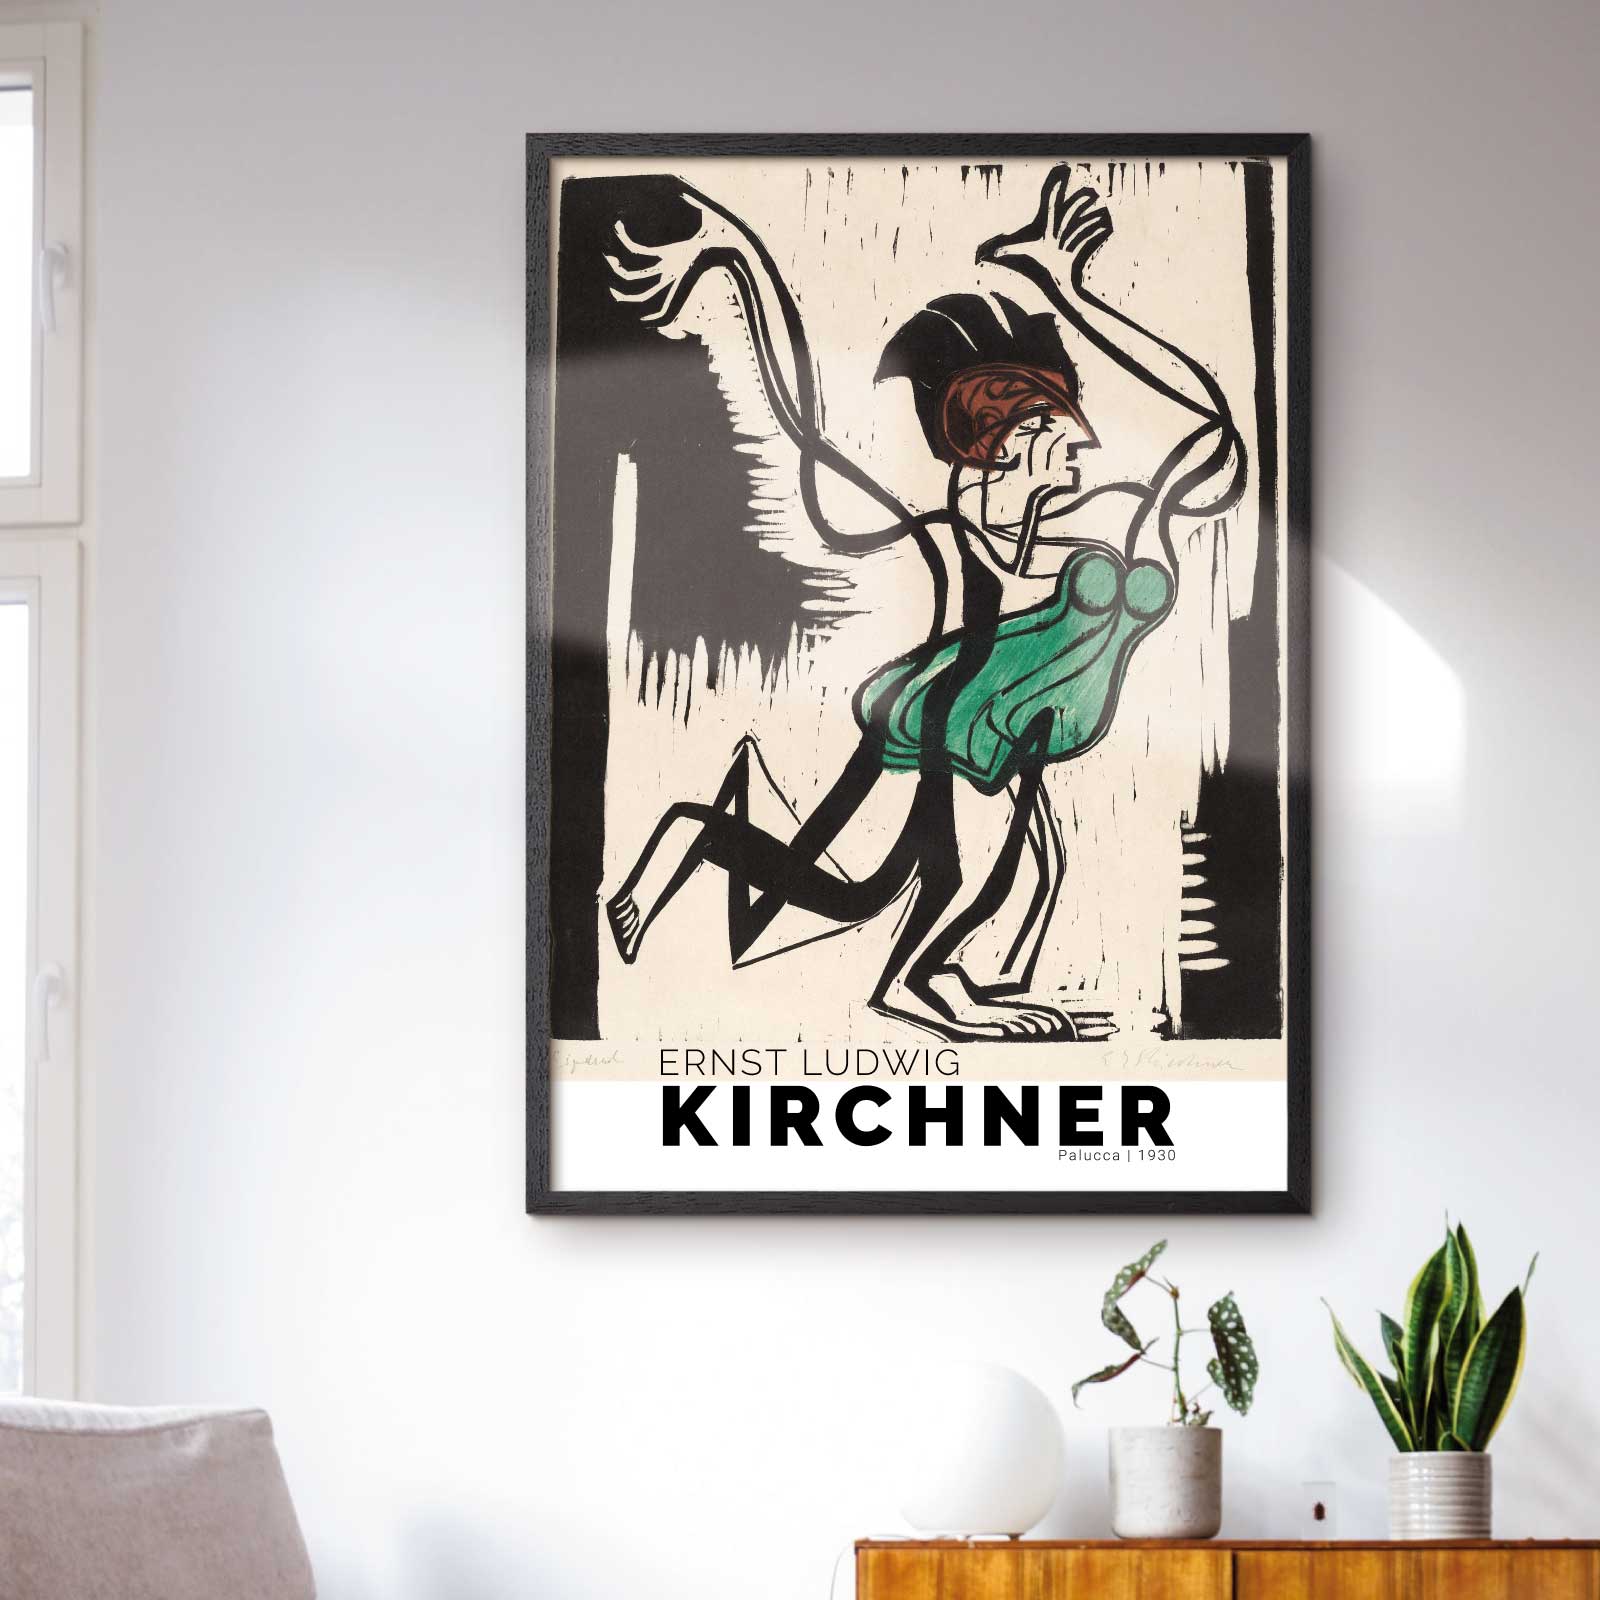 Art poster featuring. Ernst Kirchner "Palucca"